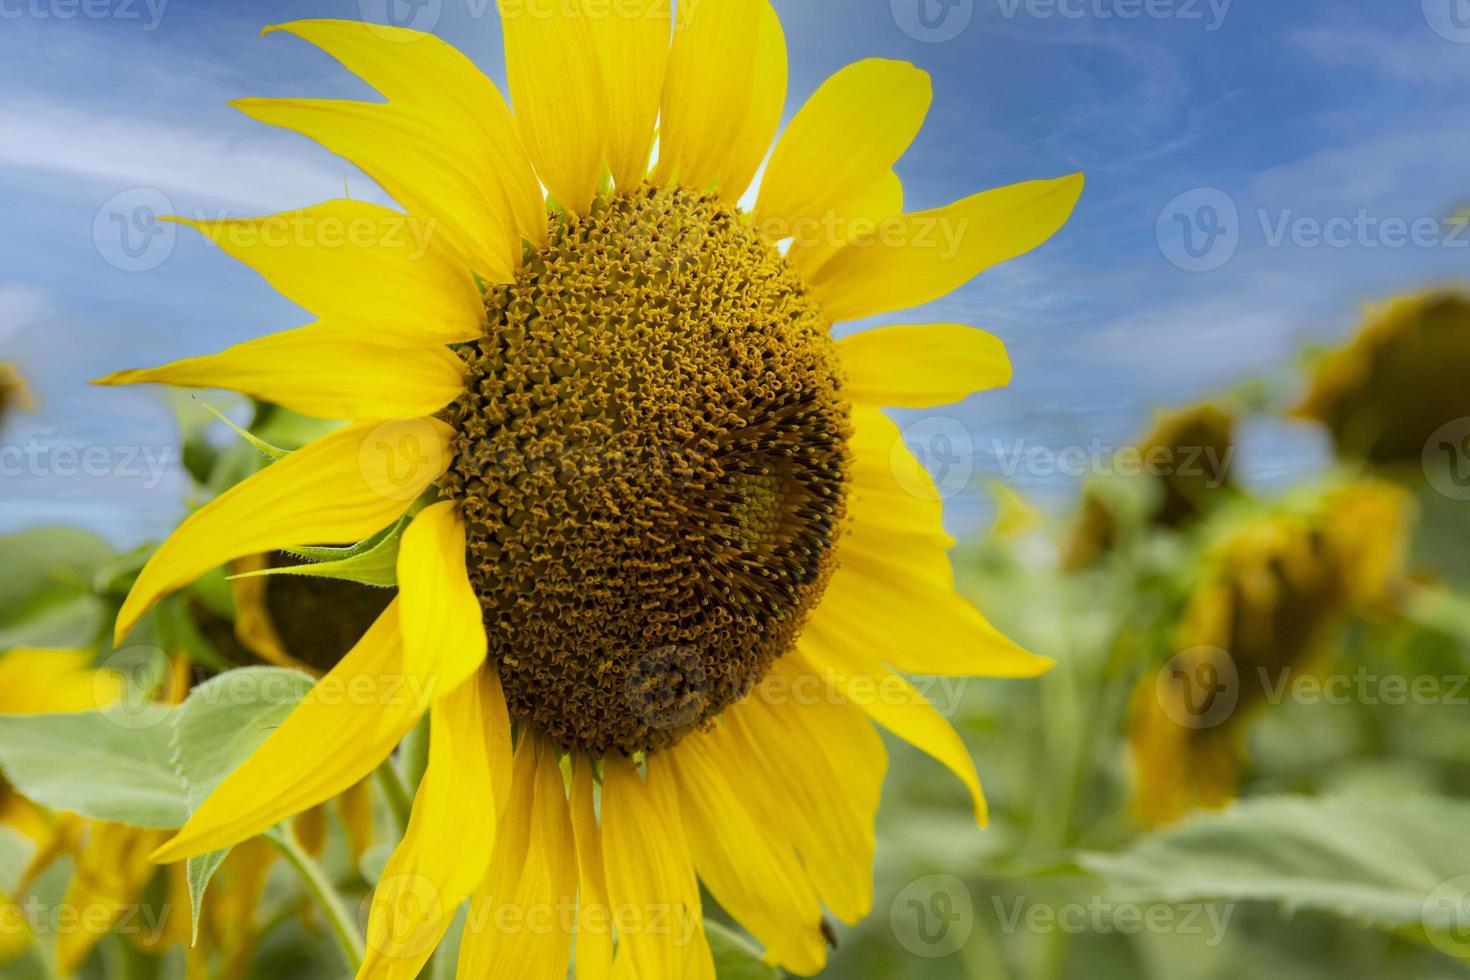 Flower, sunflower, close-up against the blue sky. Landscape photo